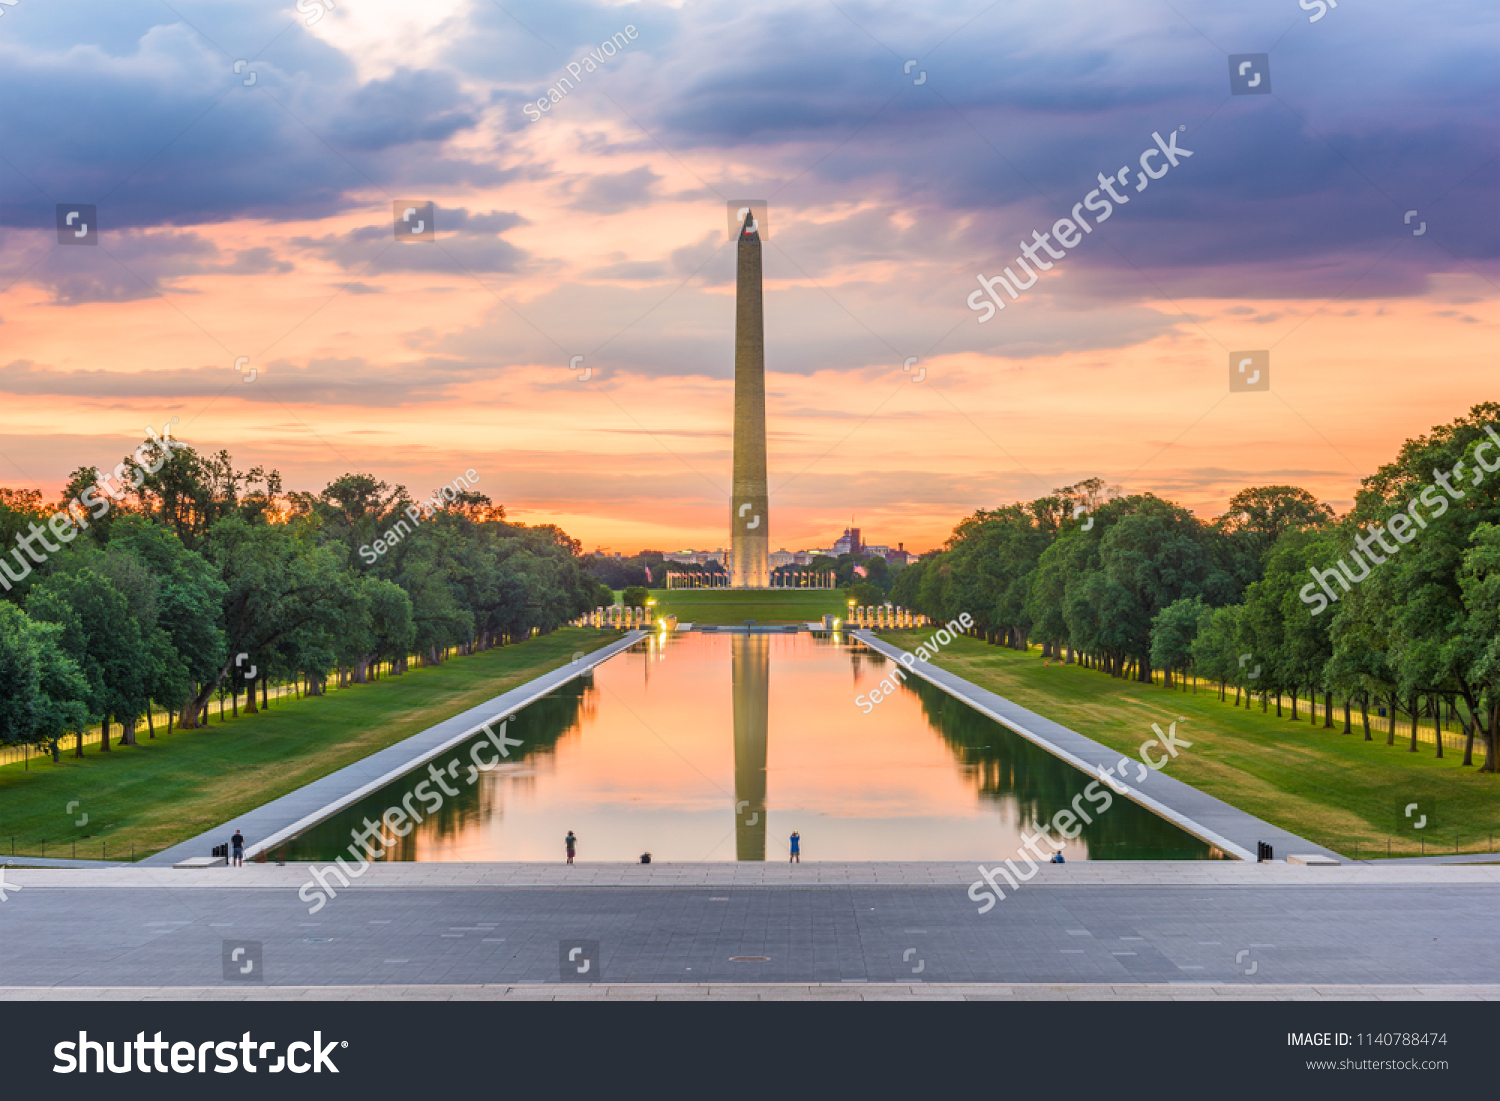 Washington Monument on the Reflecting Pool in Washington, DC, USA at dawn. #1140788474